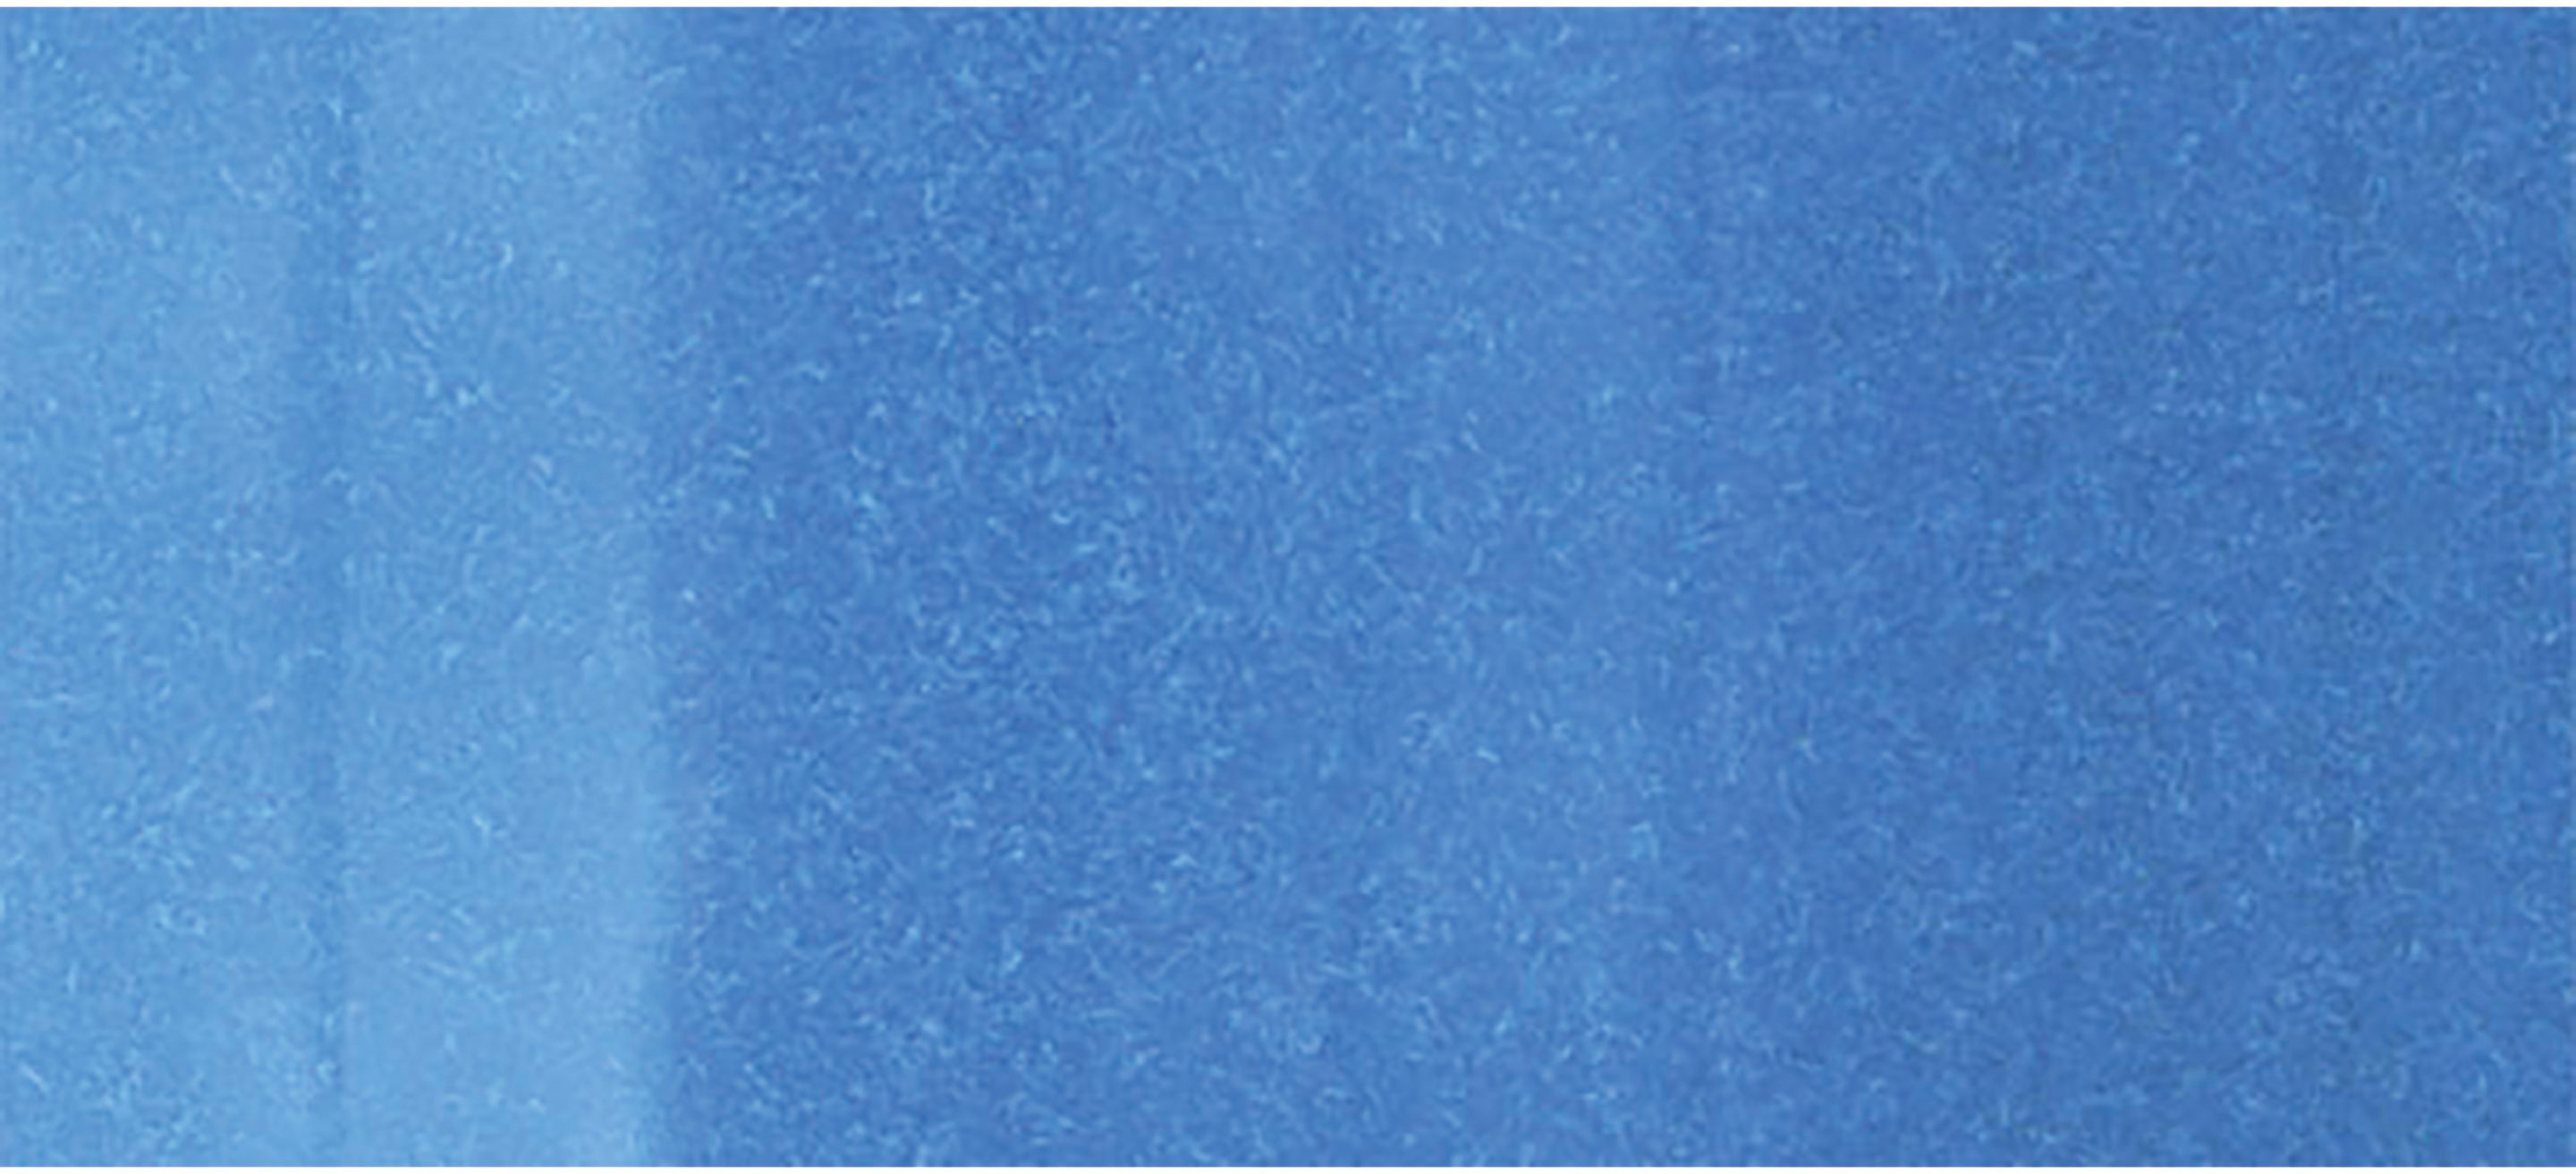 COPIC Marker Sketch 2107524 B14 - Light Blue